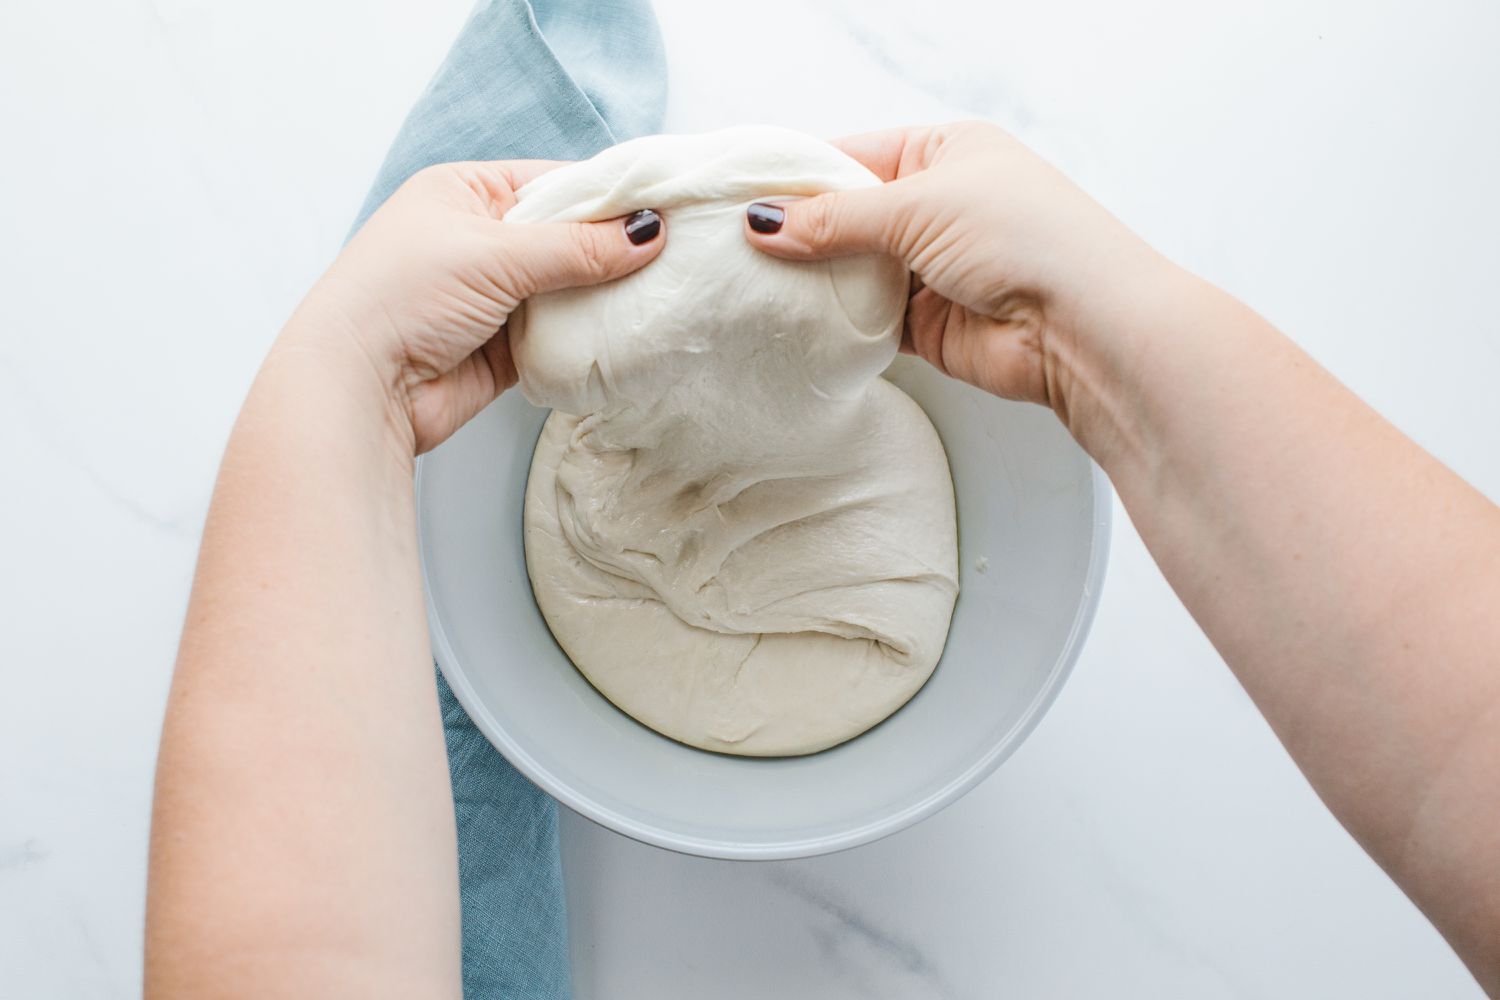 pretzel dough being folded in a bowl